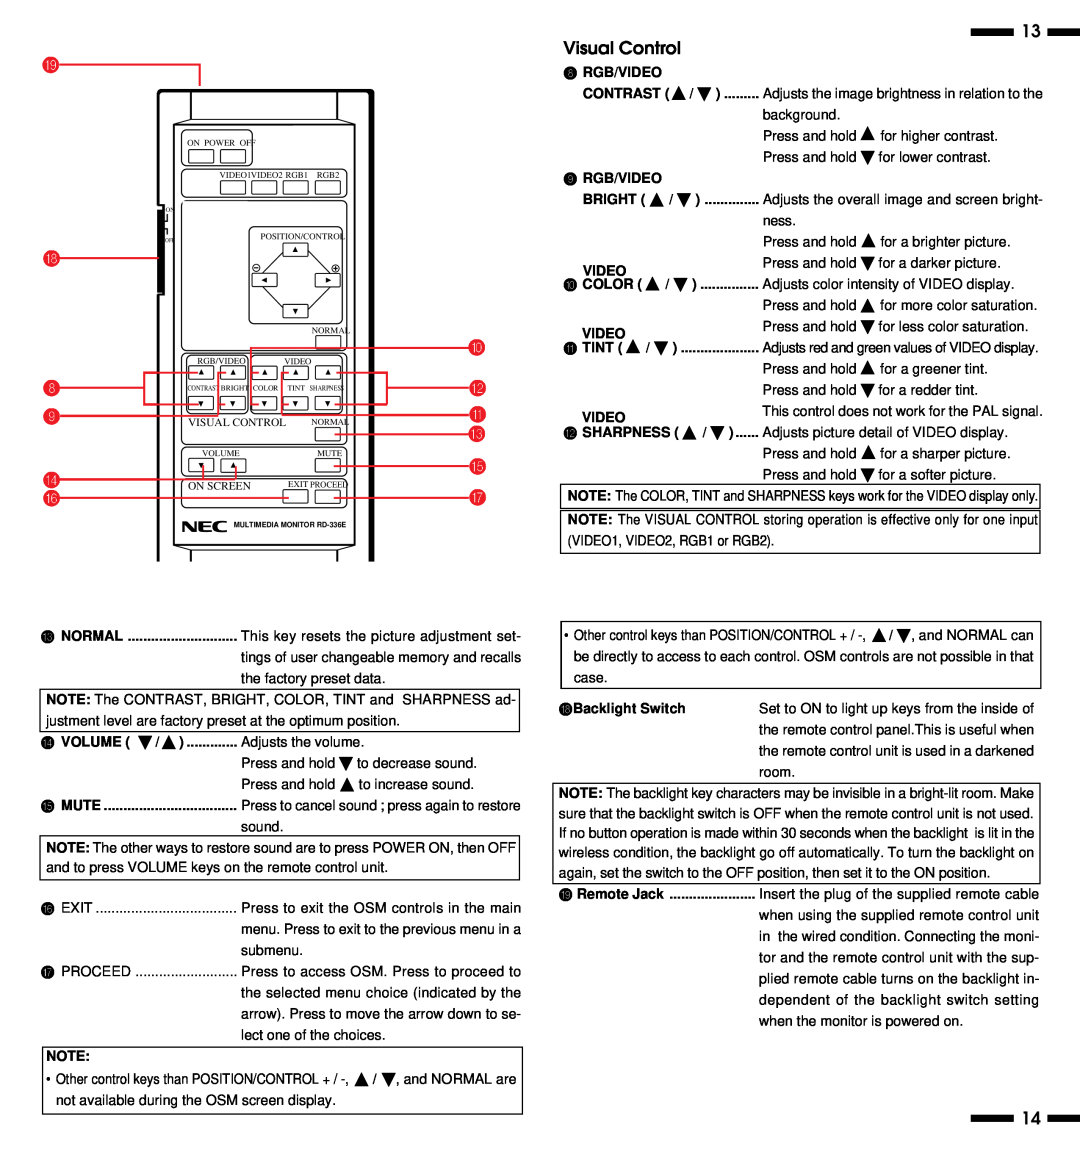 NEC PlasmaSync 3300 user manual B A C E G, Visual Control 